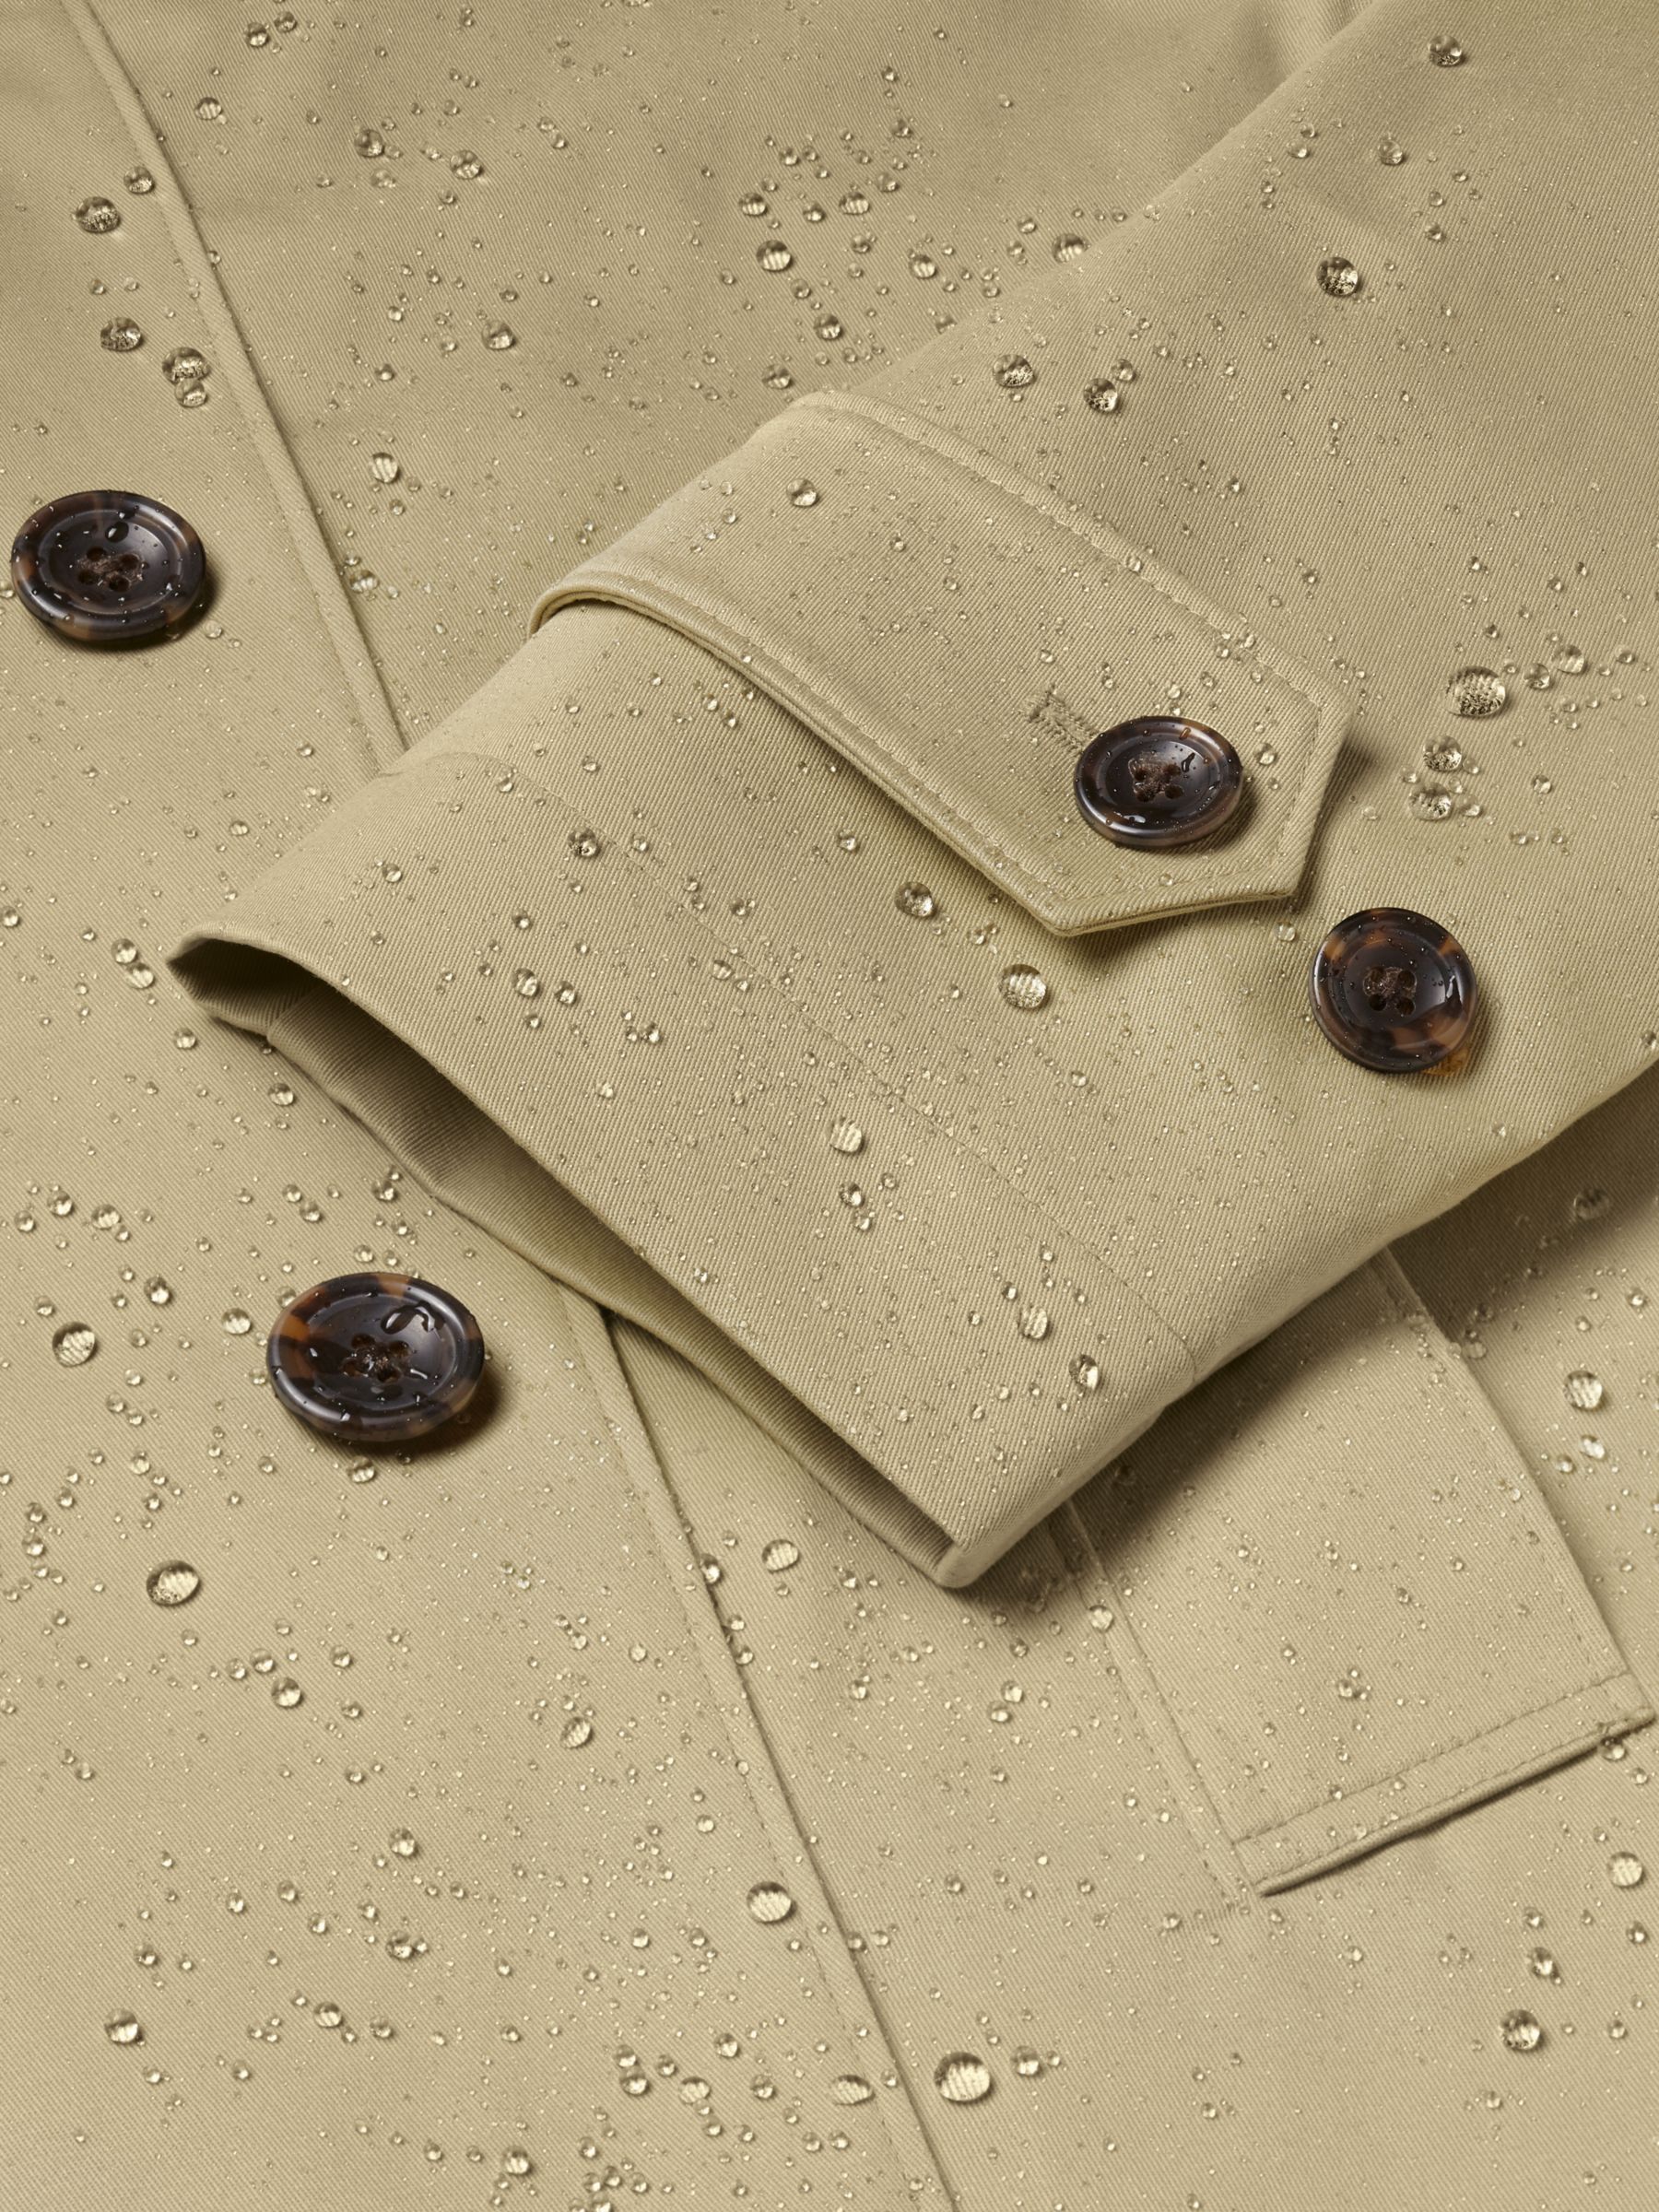 Buy Charles Tyrwhitt Classic Showerproof Raincoat Online at johnlewis.com